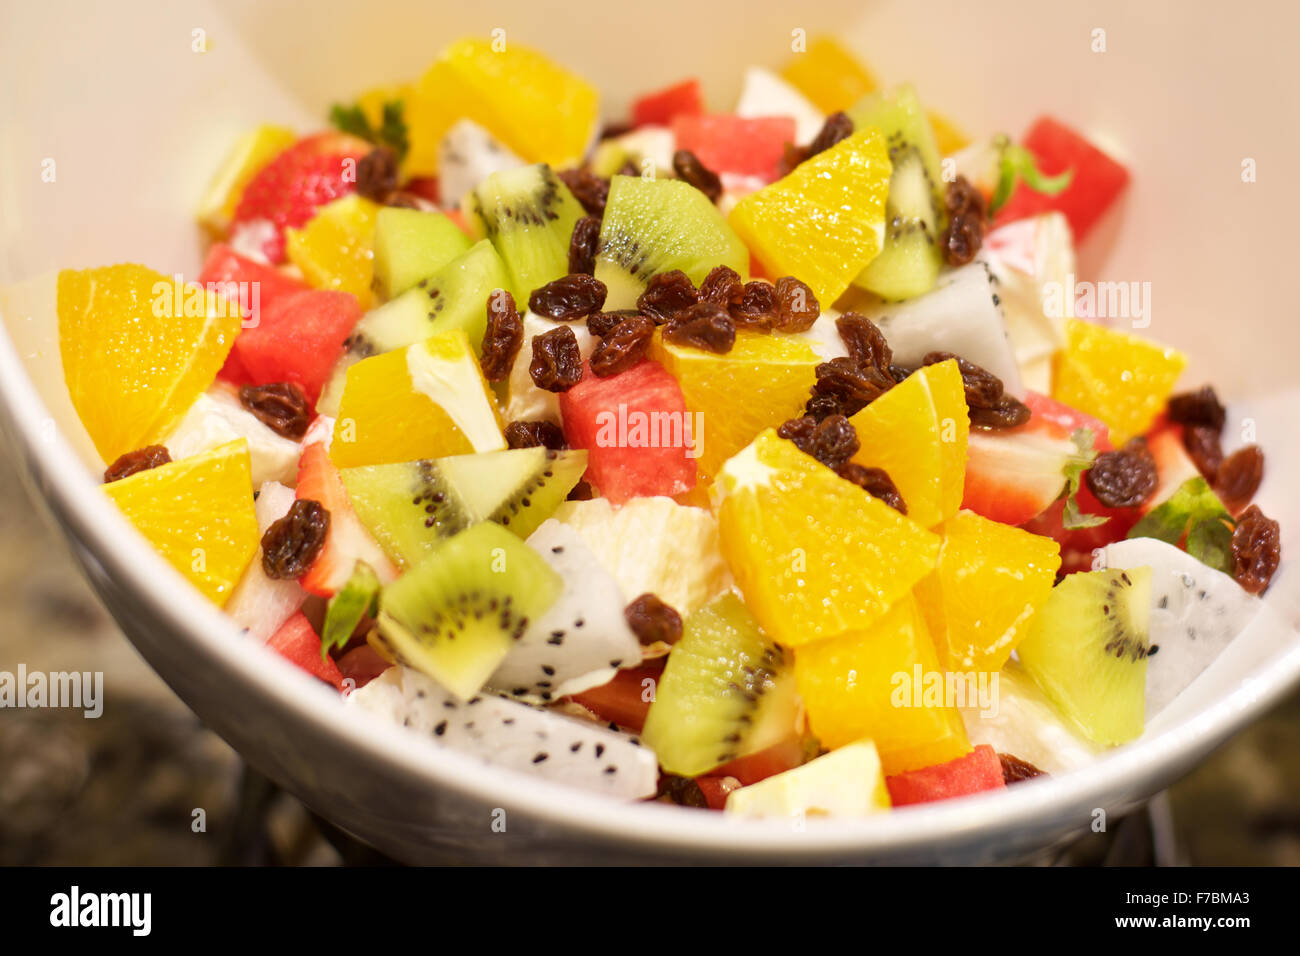 Delicious Fruit Salad with watermelon, oranges, kiwi and raisins Stock Photo